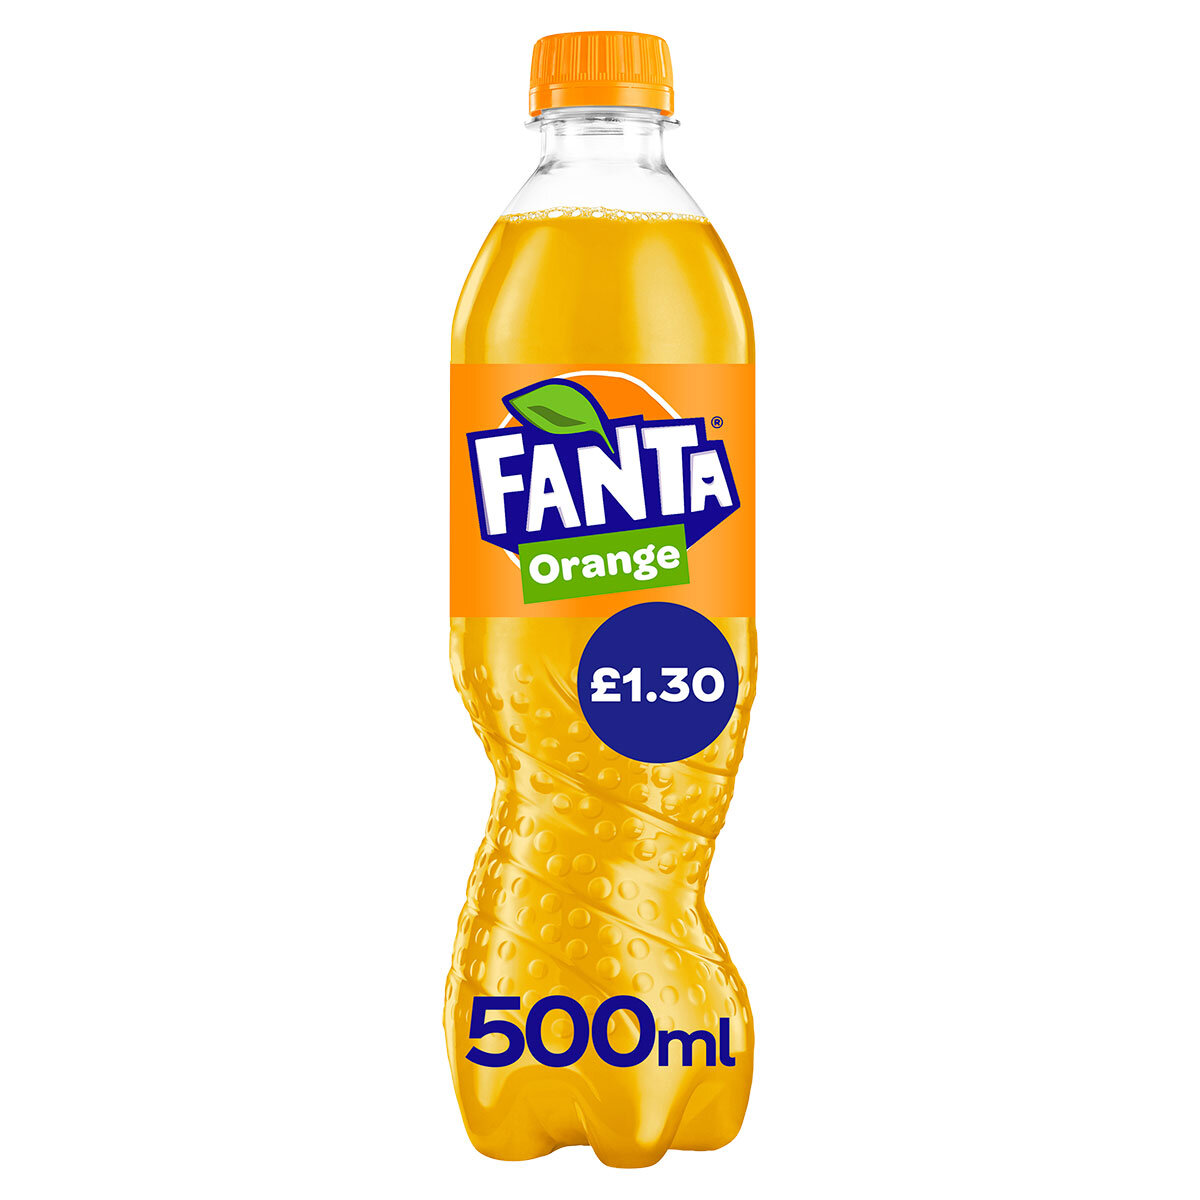 Fanta Orange PMP £1.30, 500ml